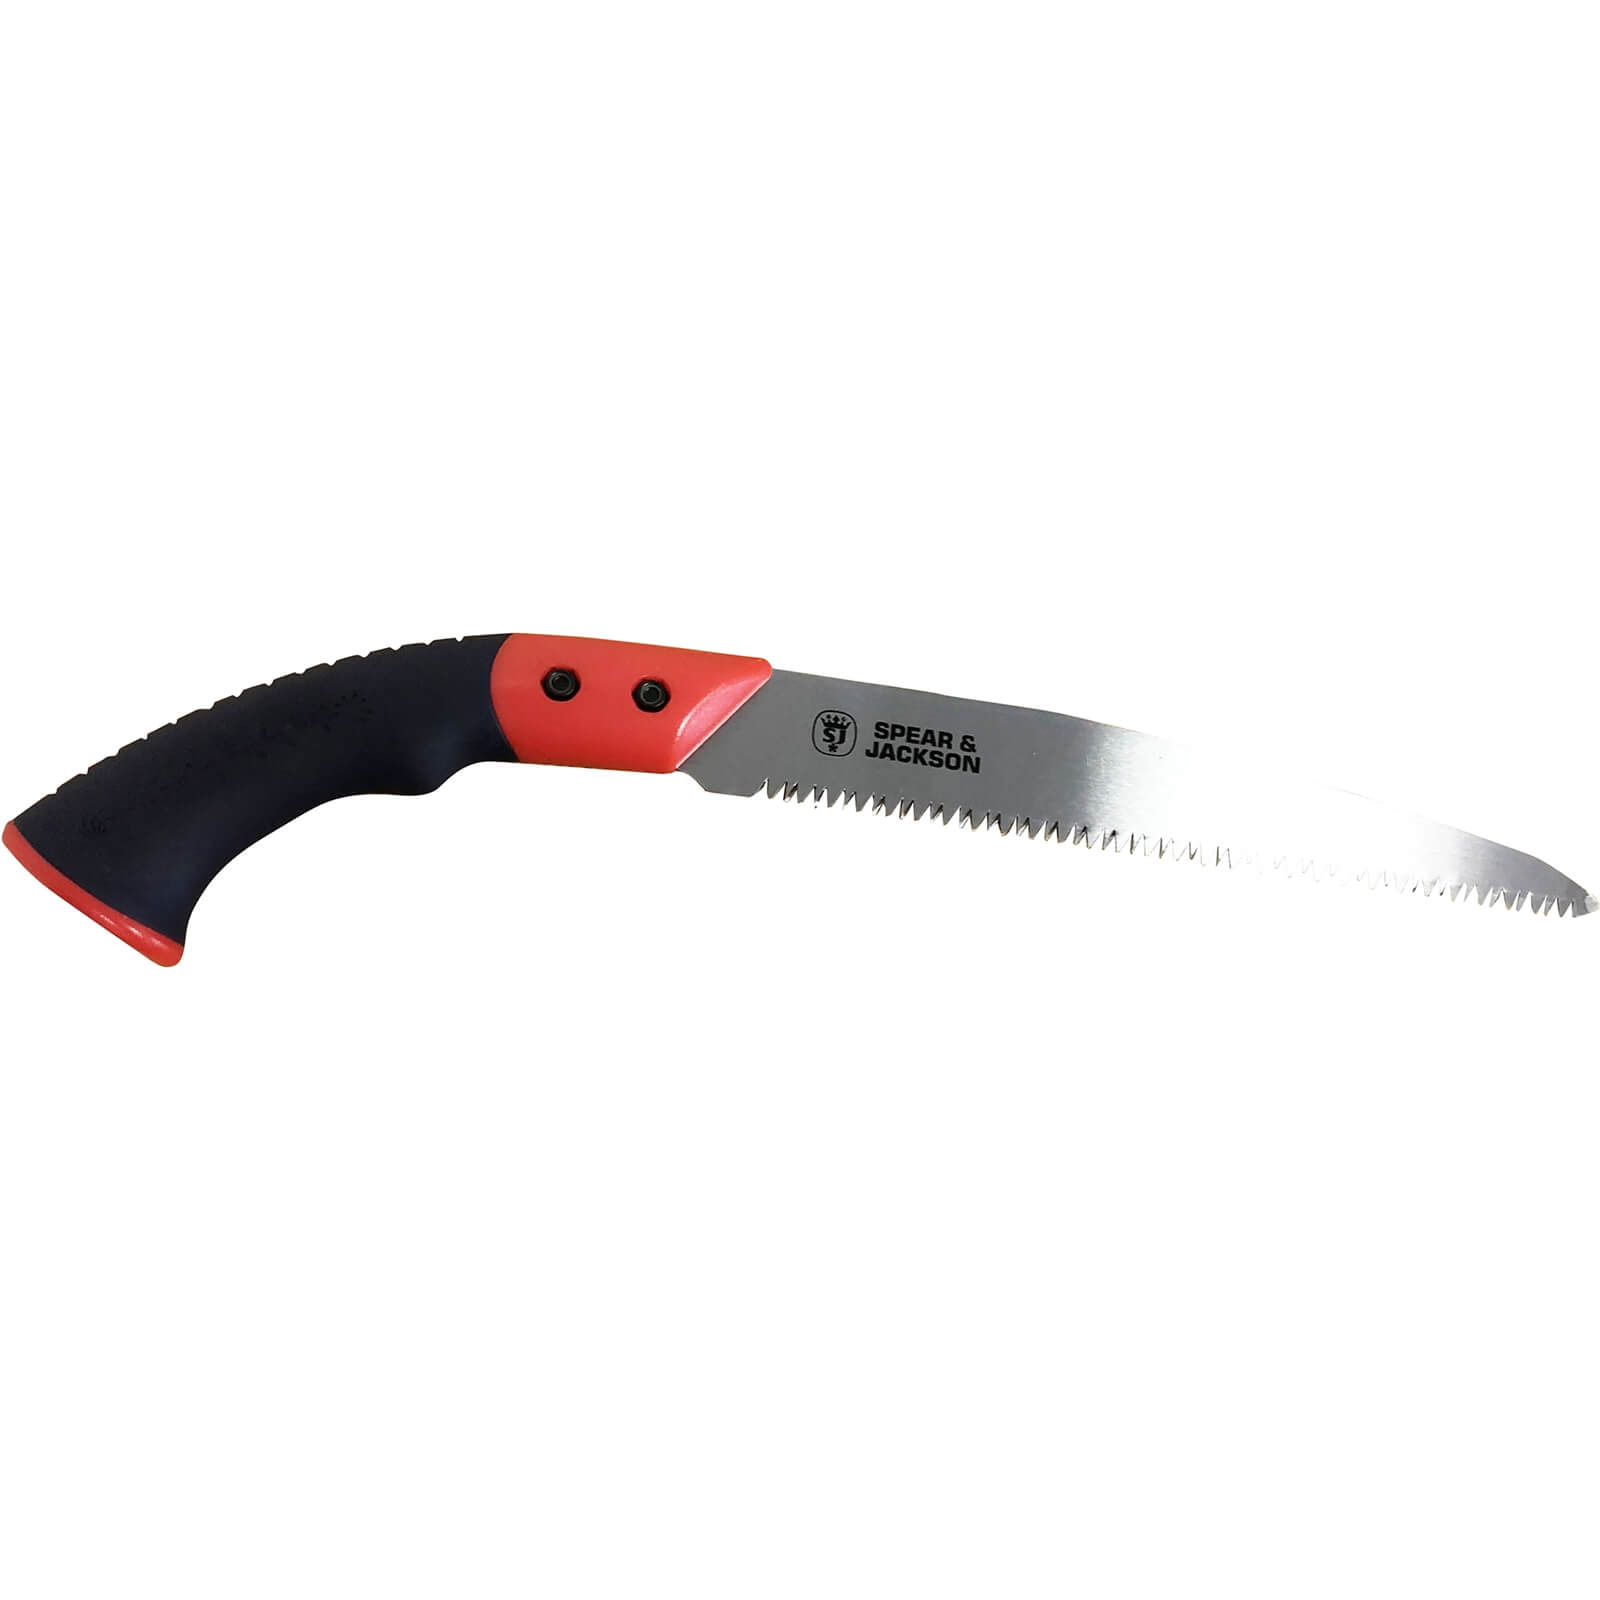 Photo of Spear & Jackson Razorsharp Fixed Blade Pruning Saw - 22.5cm